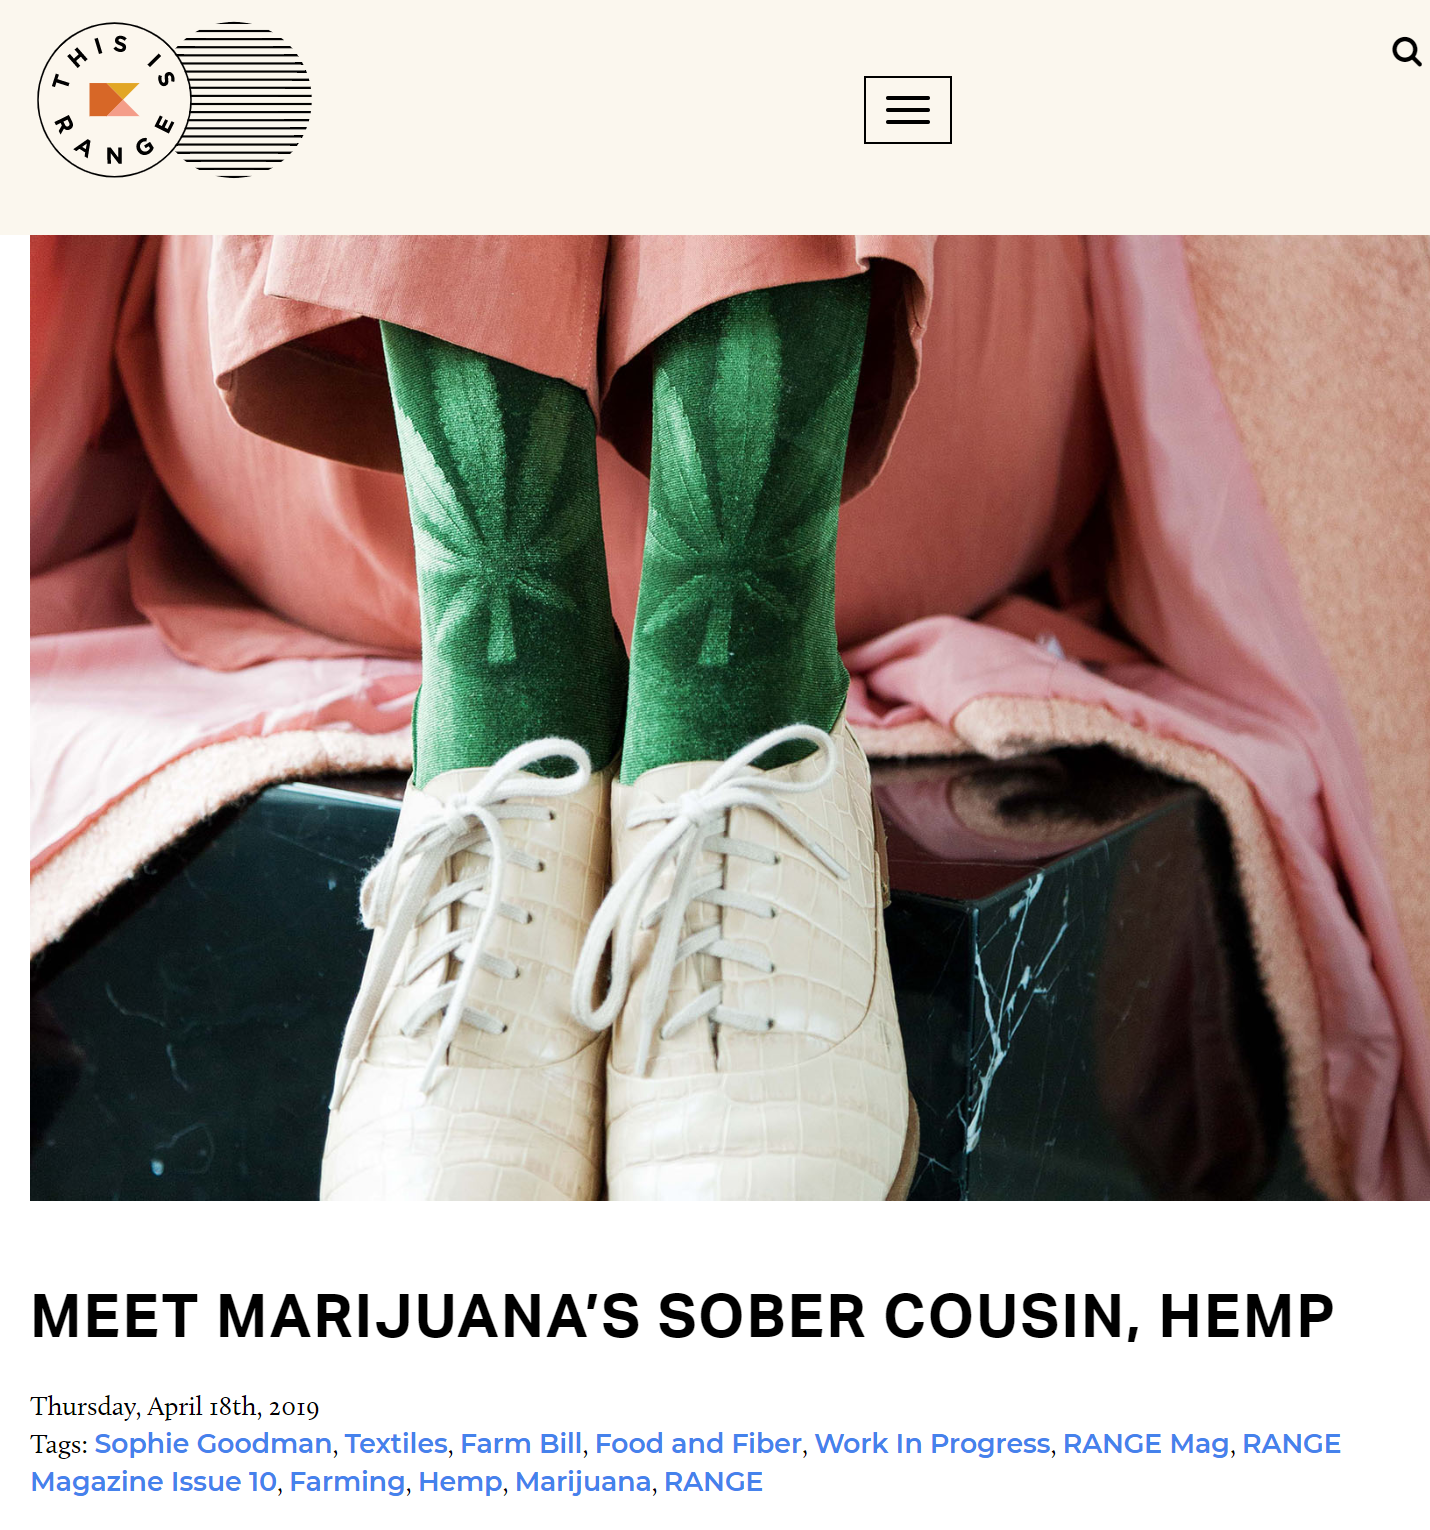 RANGE Magazine, "Meet Marijuana's Sober Cousin, Hemp"